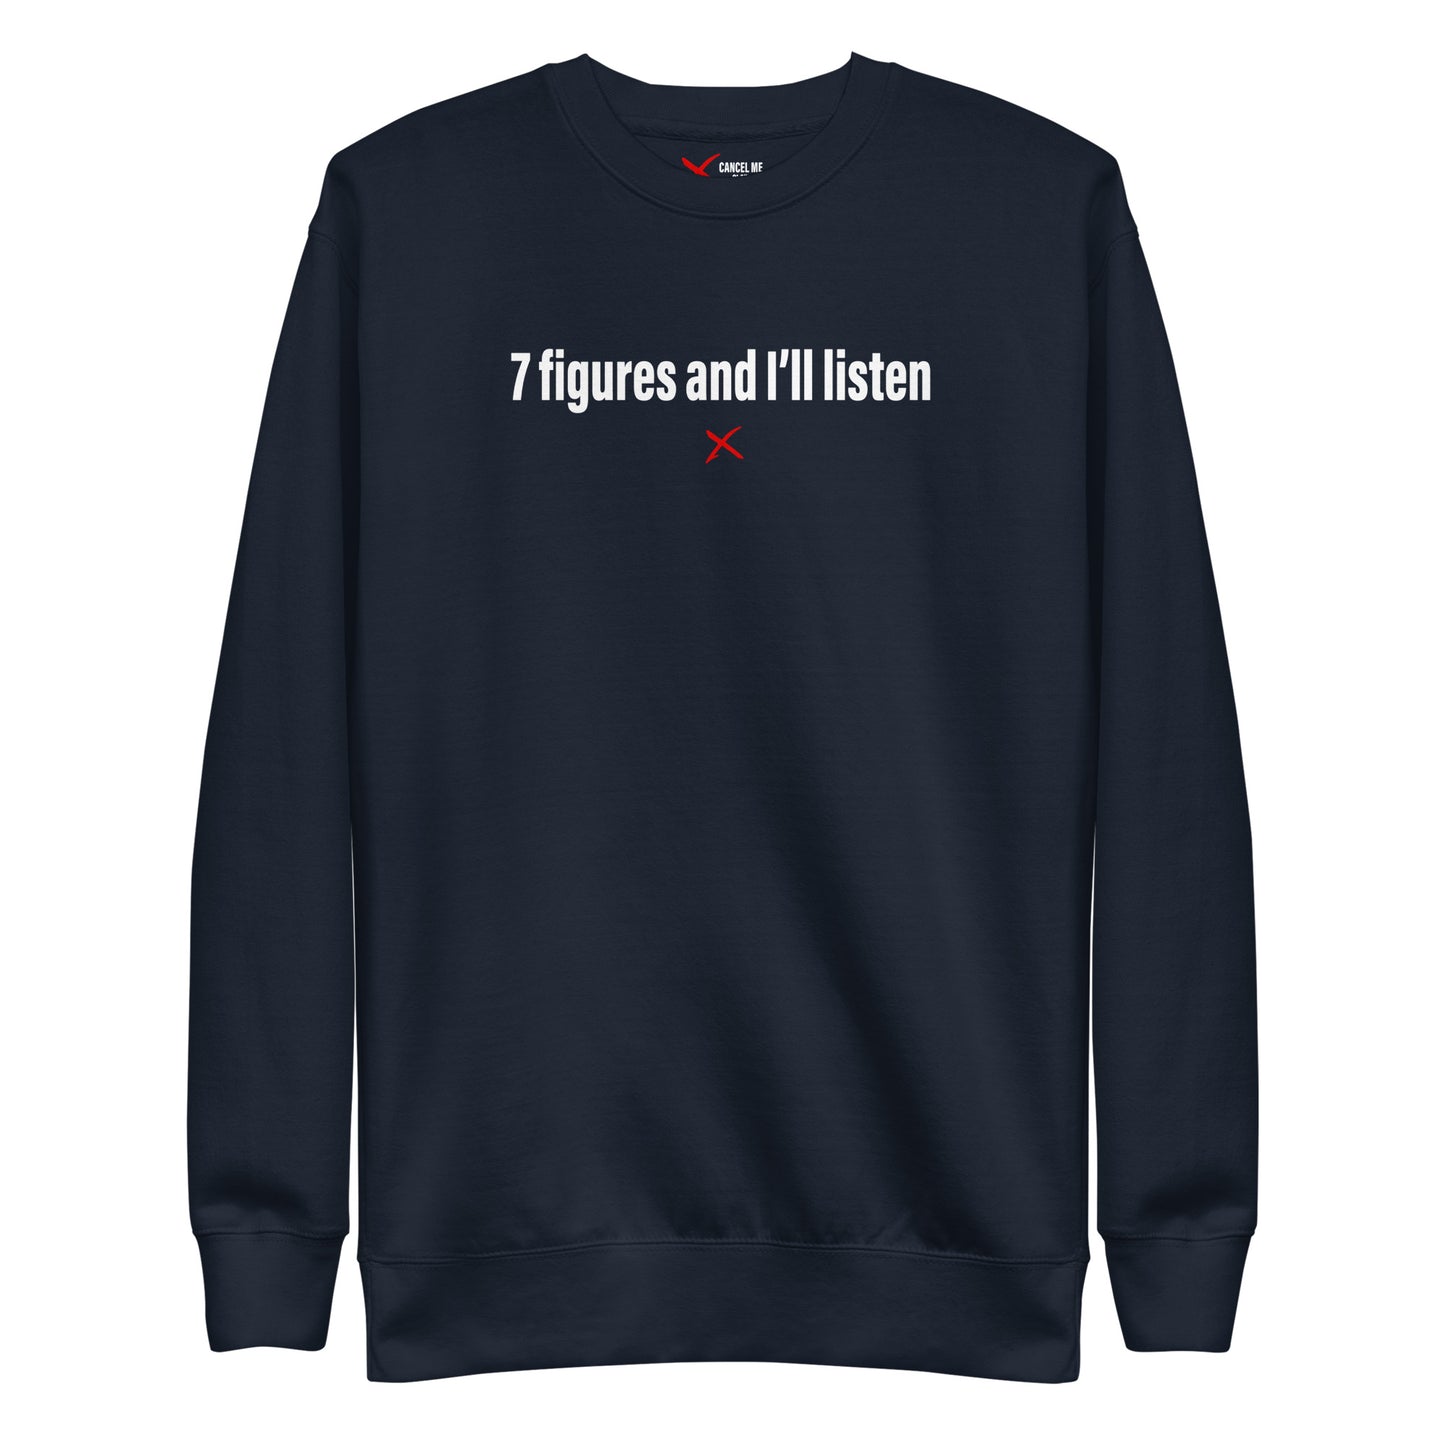 7 figures and I'll listen - Sweatshirt